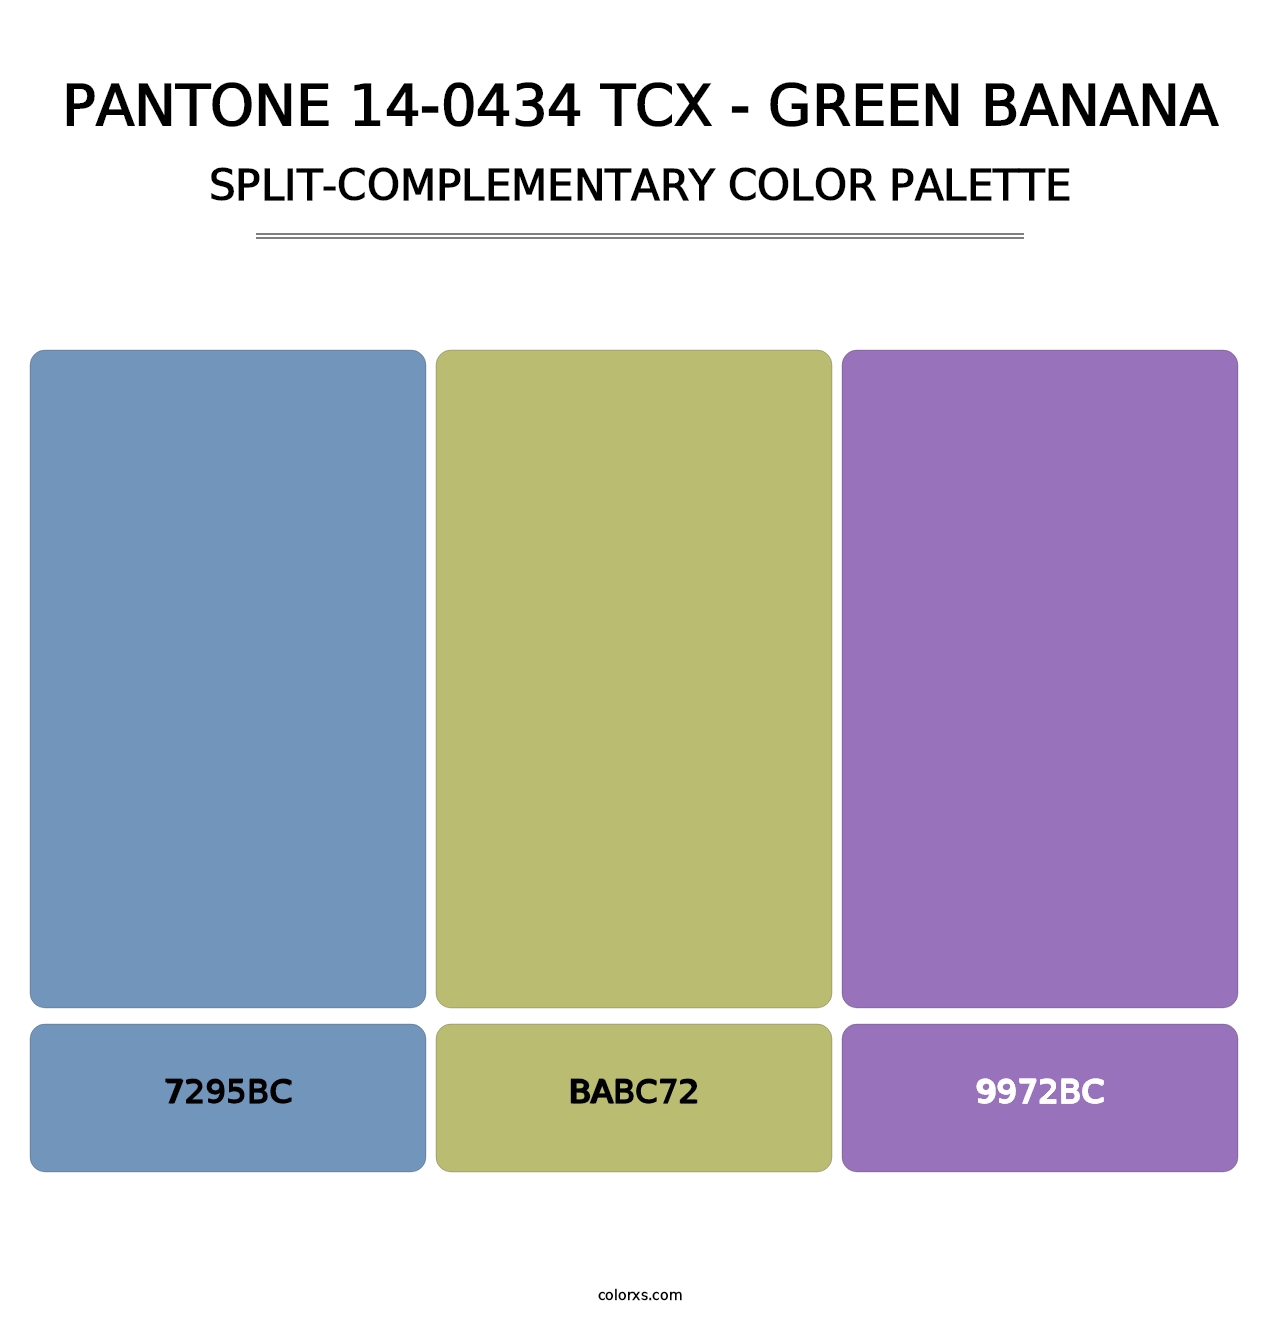 PANTONE 14-0434 TCX - Green Banana - Split-Complementary Color Palette